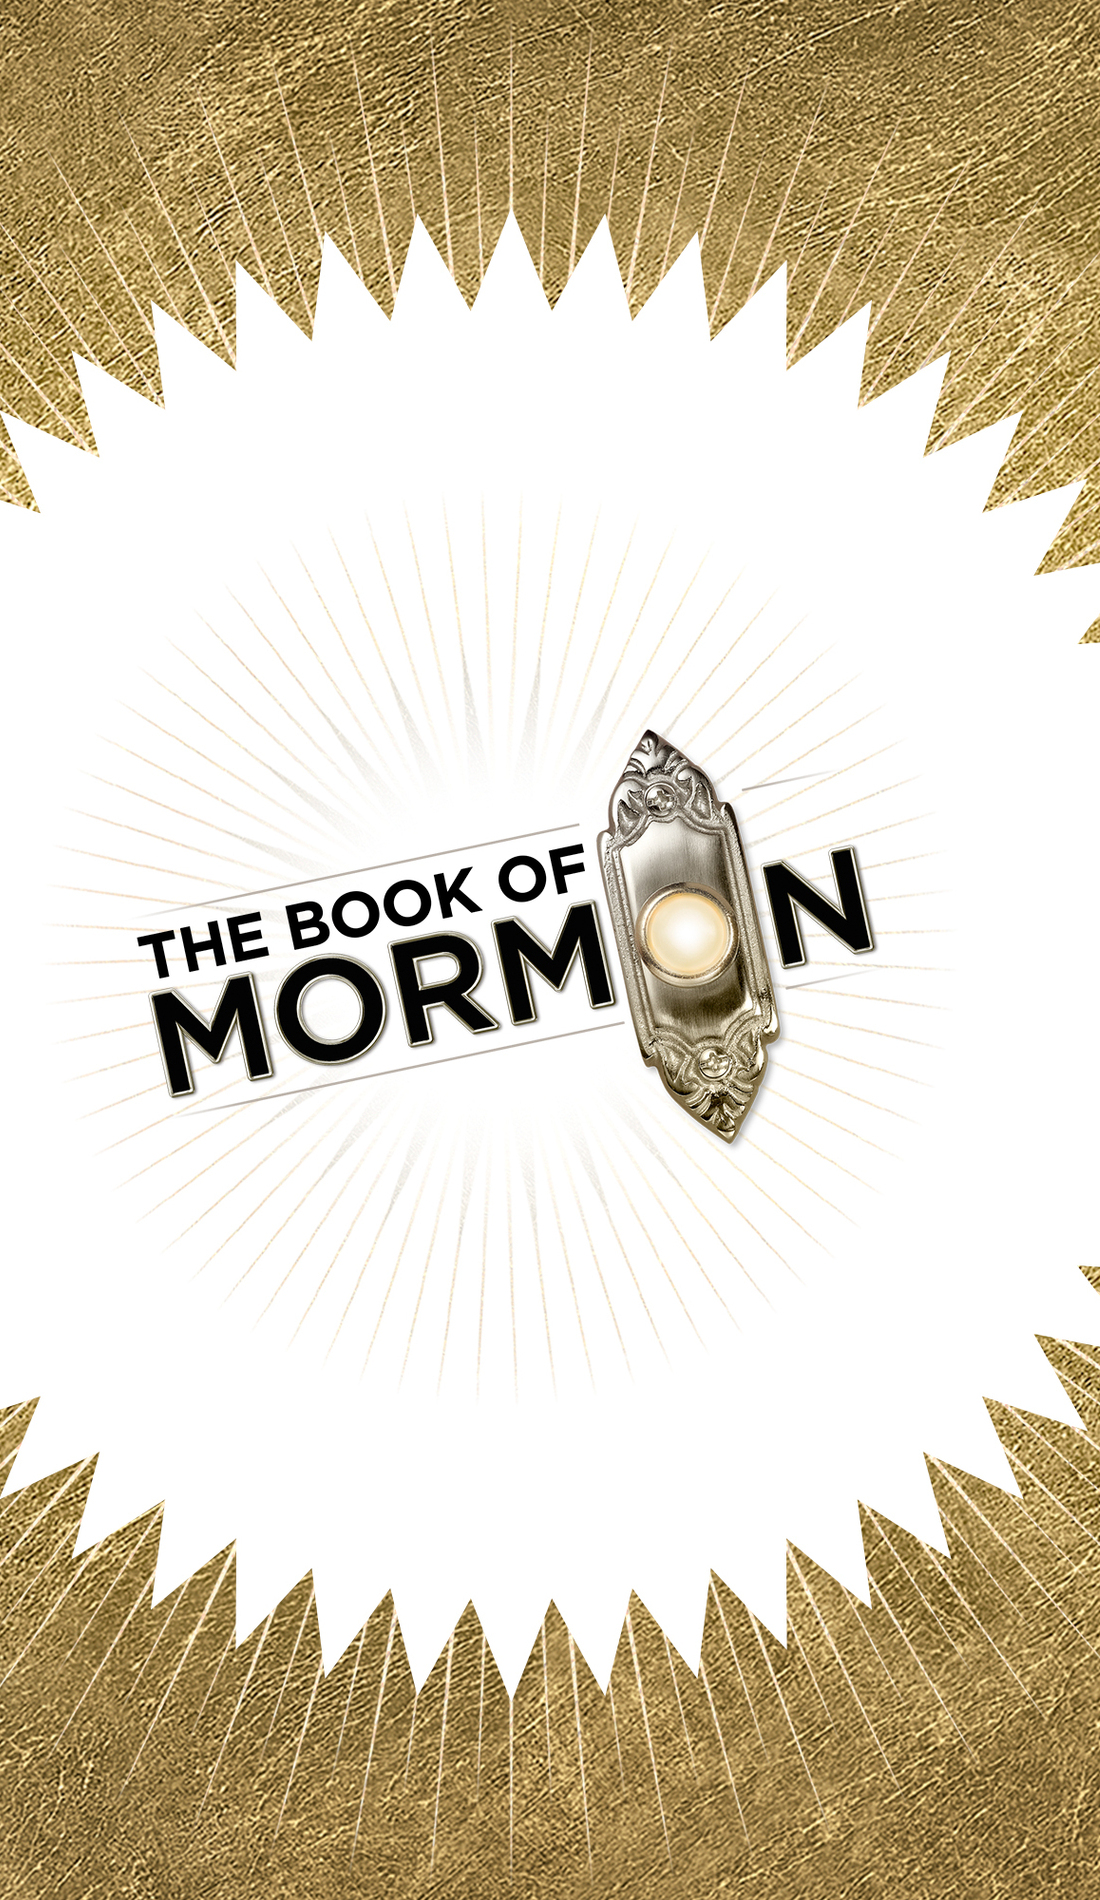 A The Book of Mormon live event